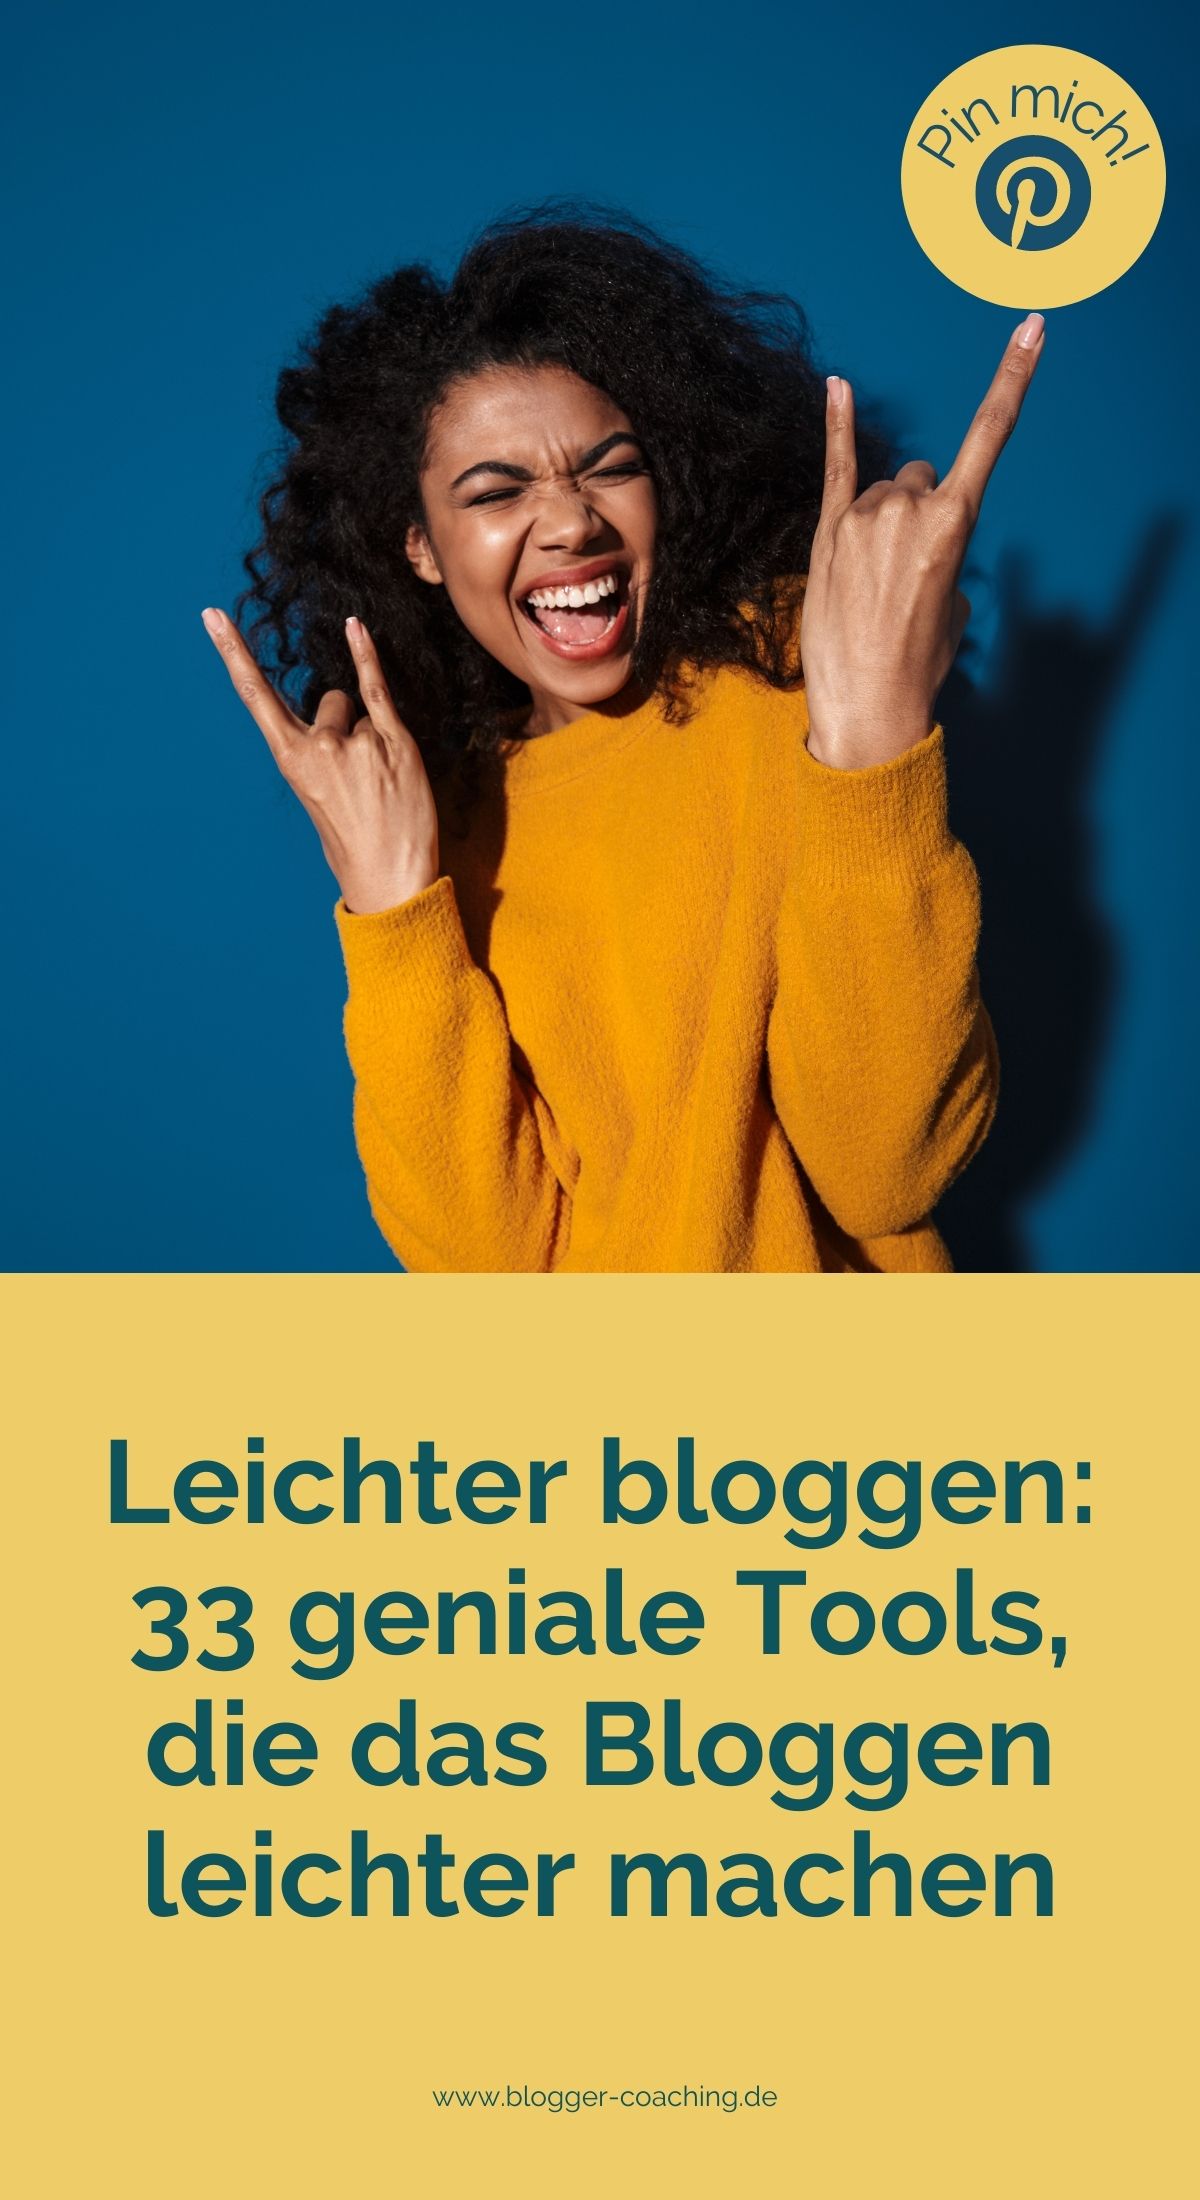 Leichter bloggen: 10 geniale Tools für Blogger | Blogger-Coaching.de